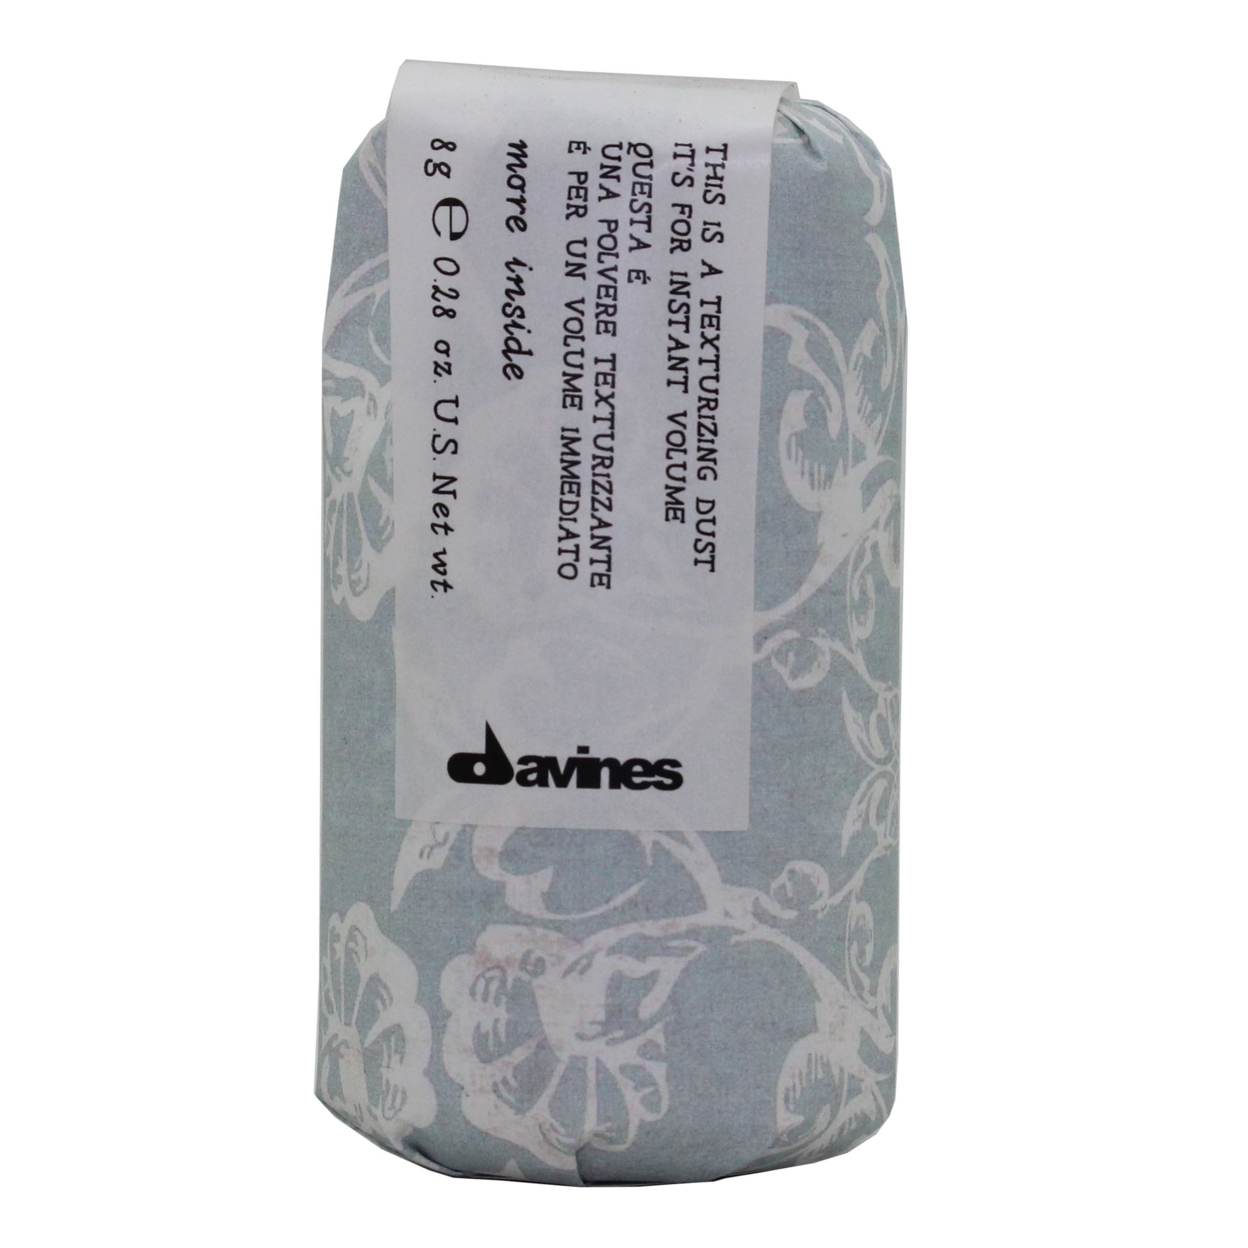 Davines More Inside Texturizing Dust 8g/0.28oz